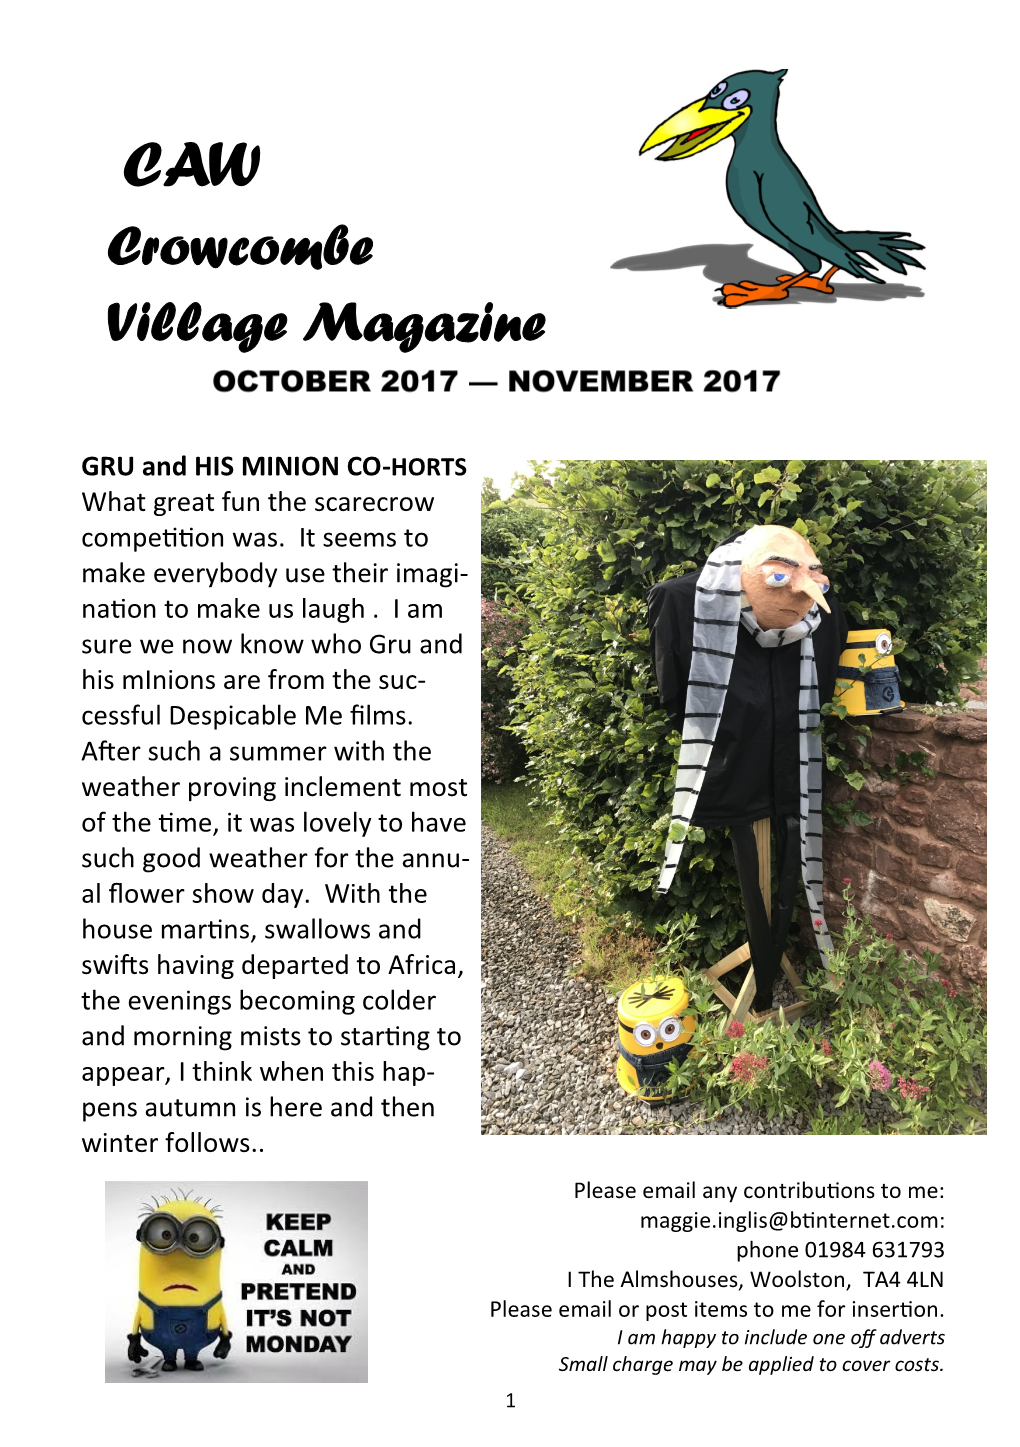 Crowcombe Village Magazine